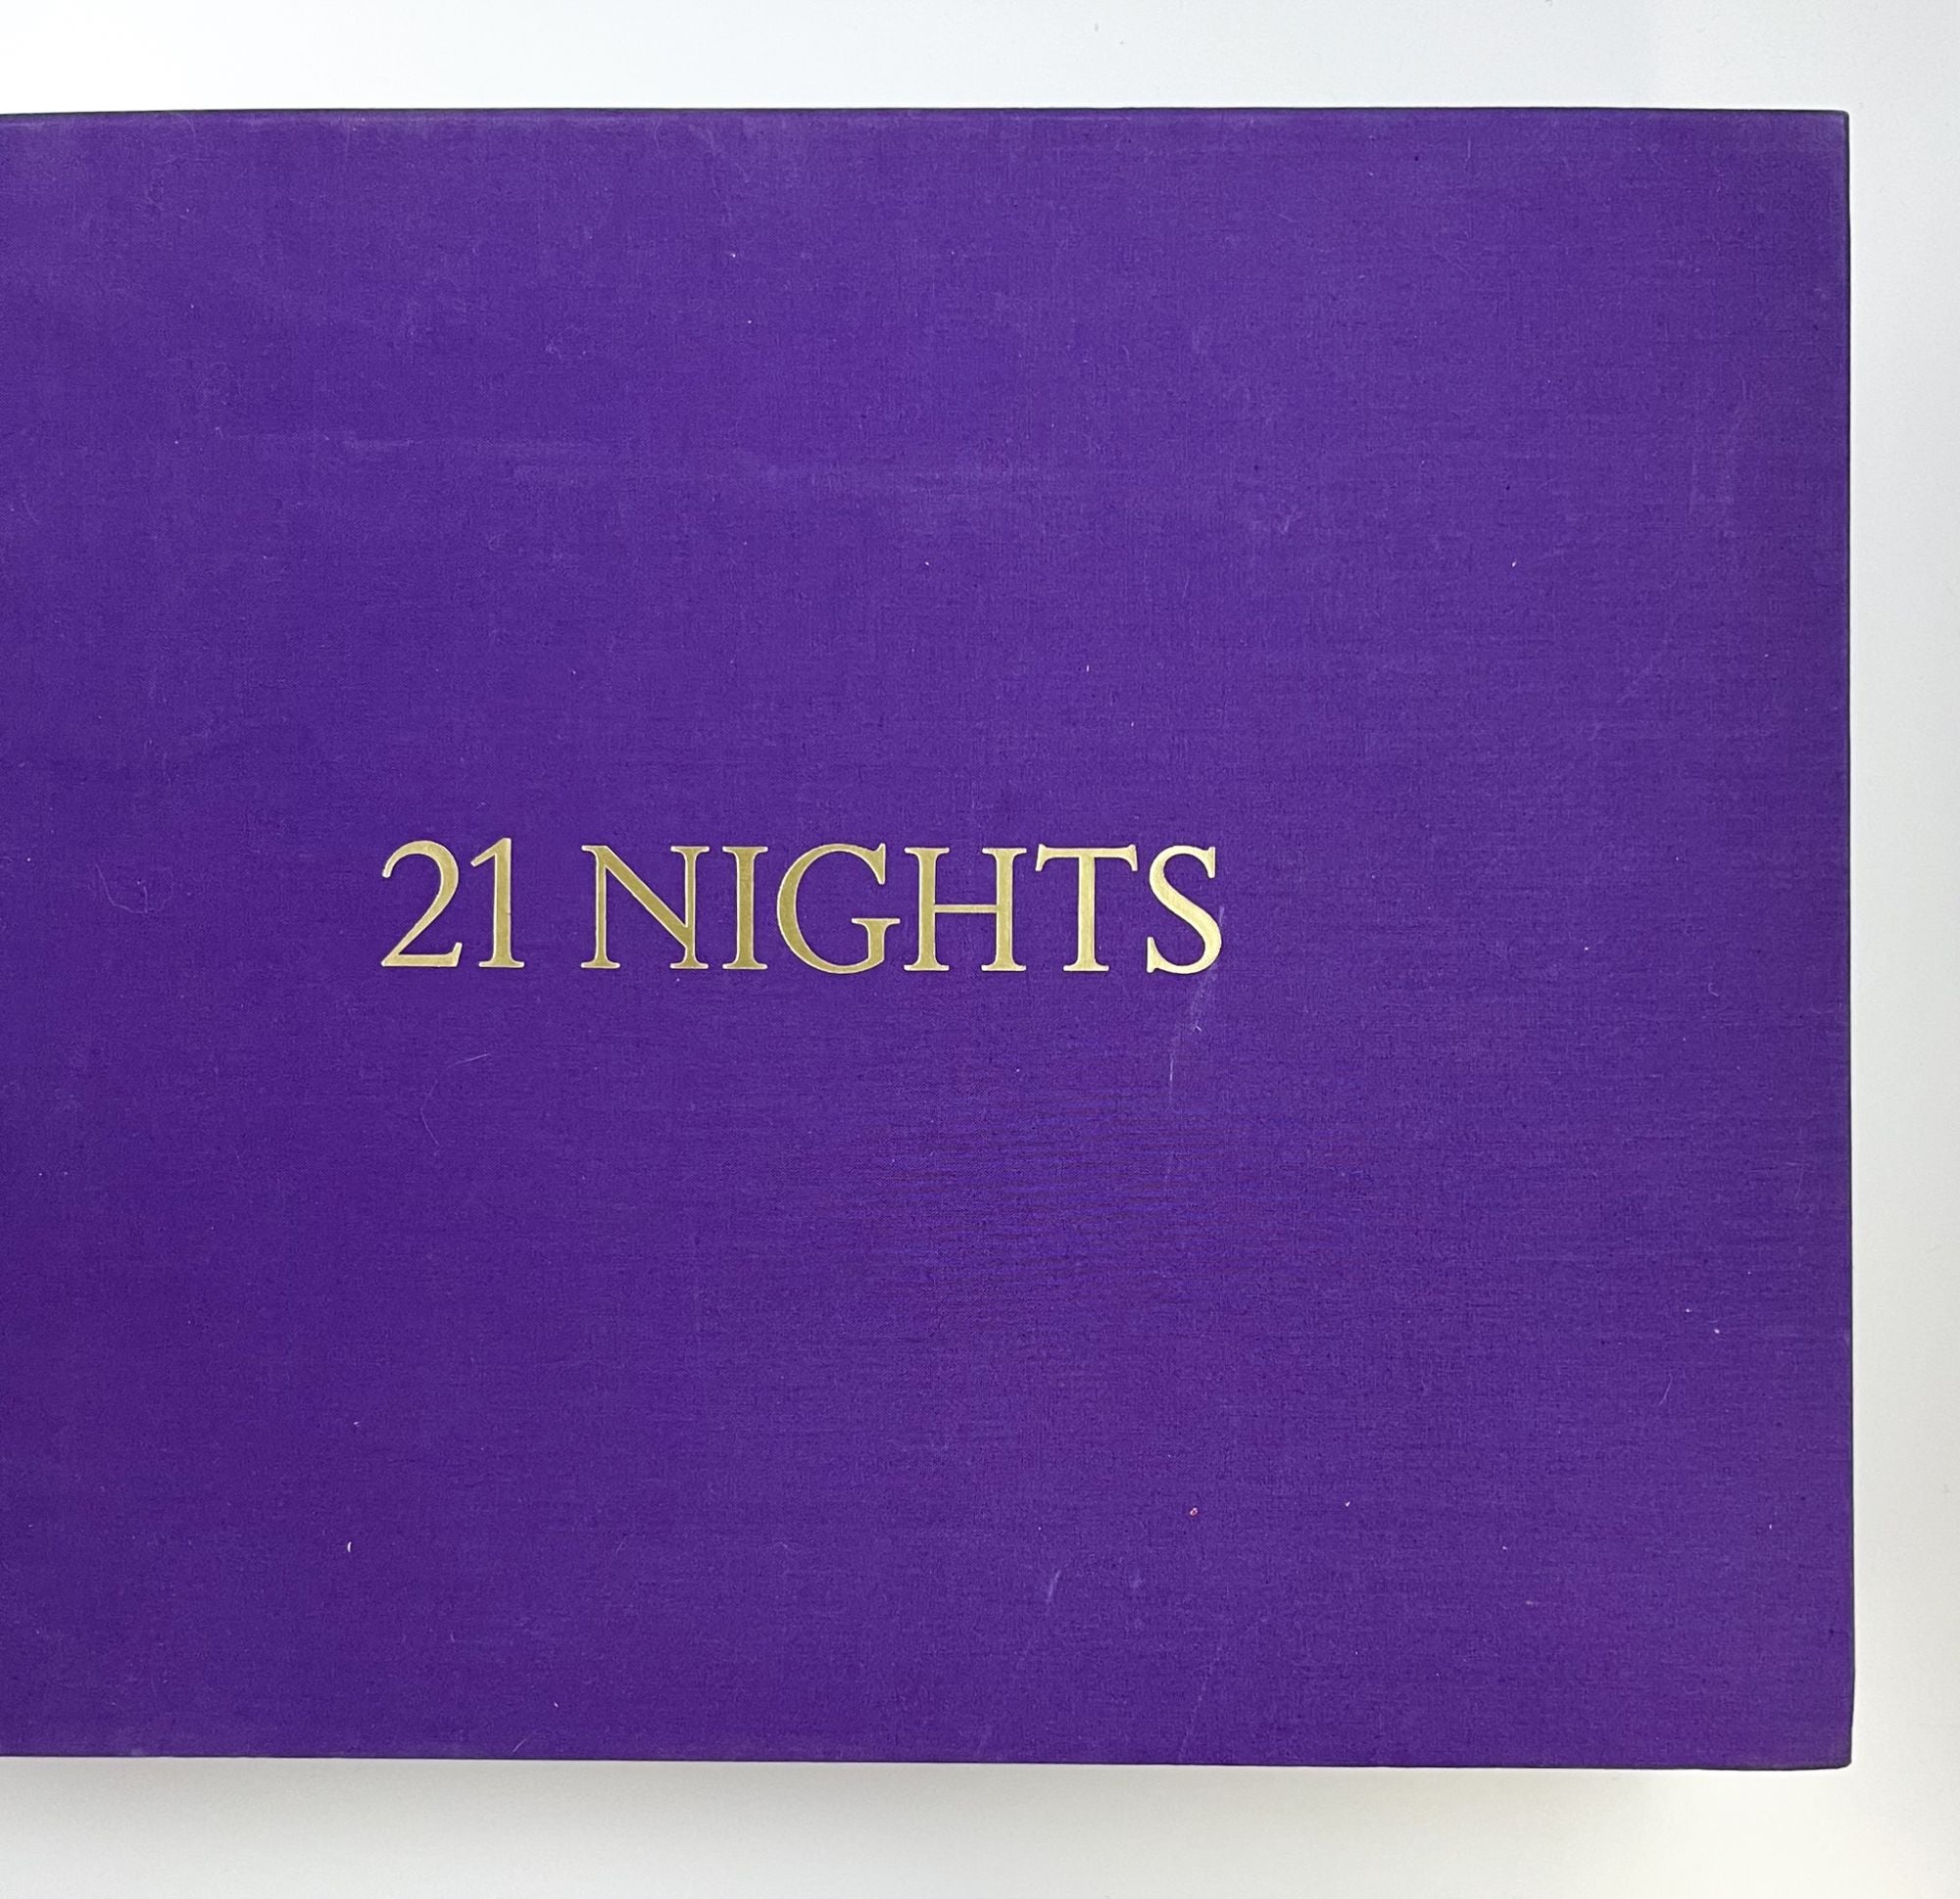 21 NIGHTS by Prince, Randee St. Nicholas on Type Punch Matrix